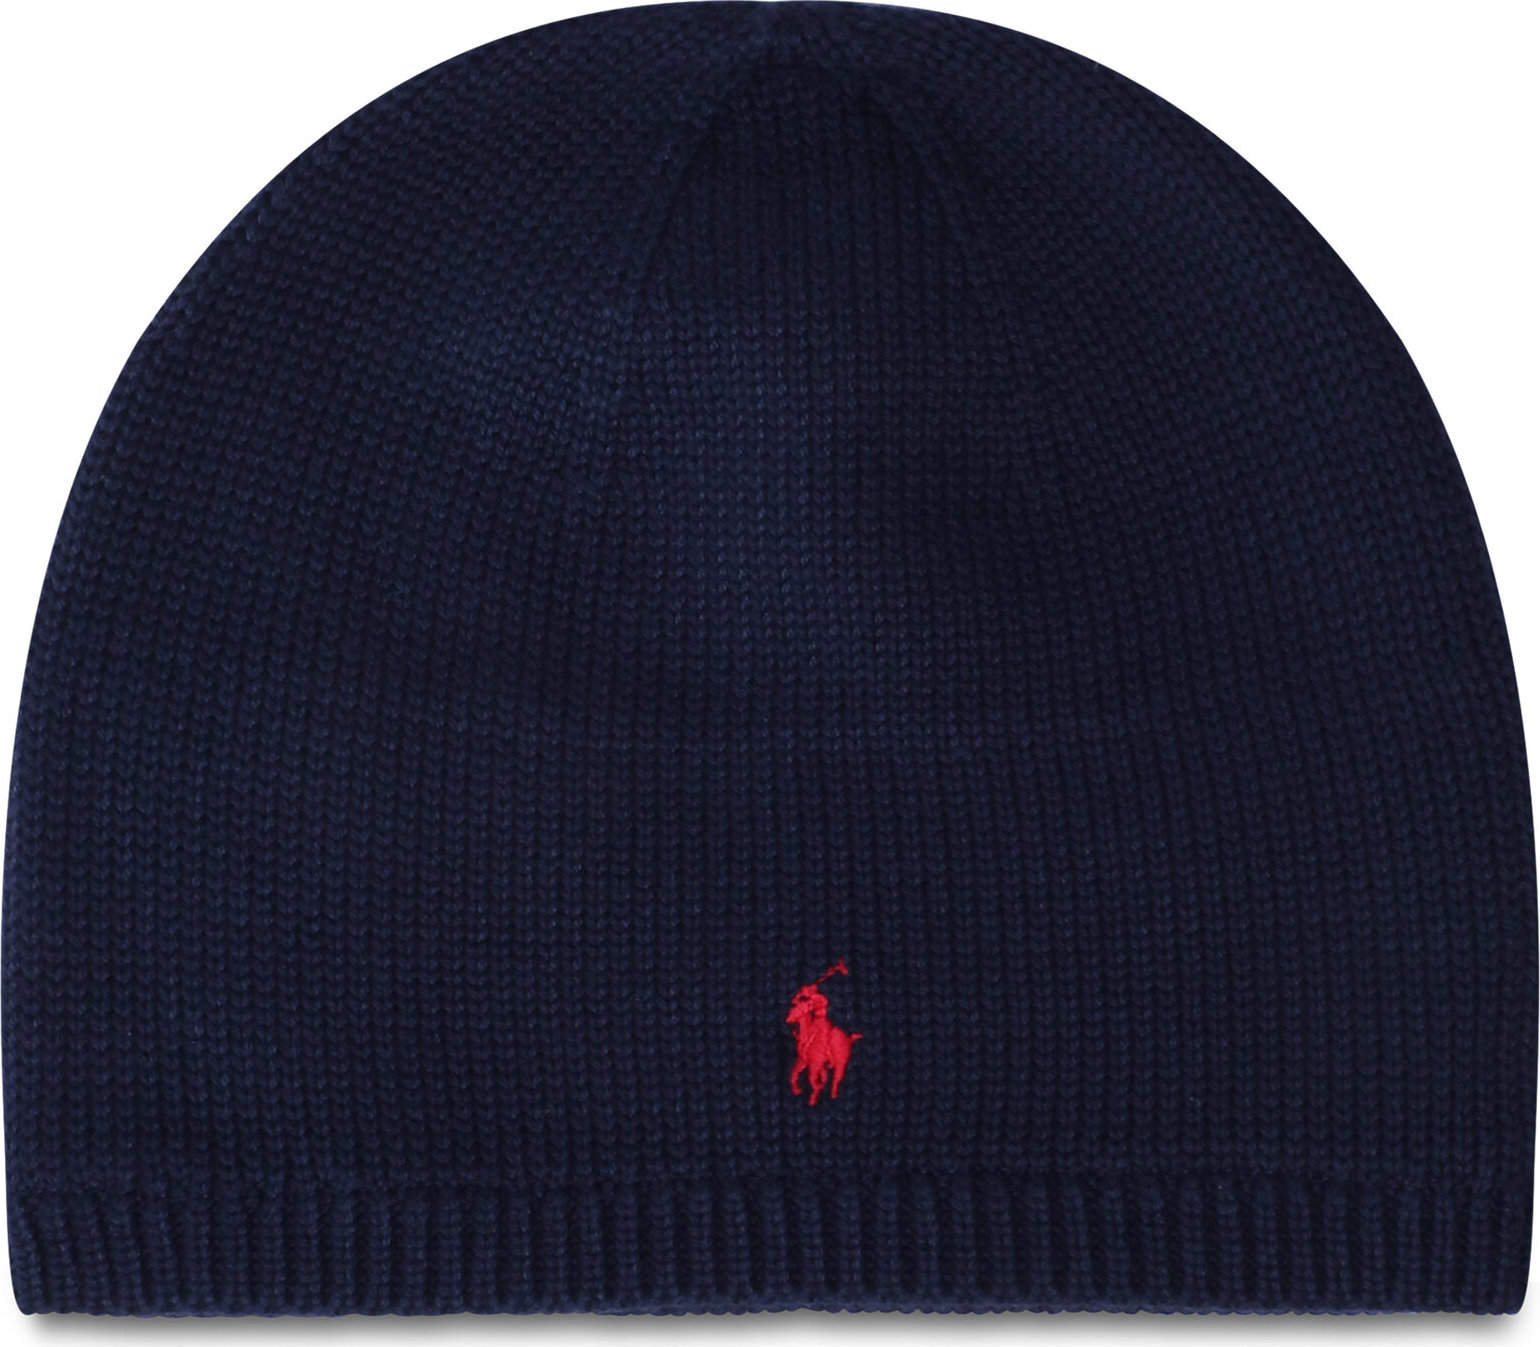 Čepice Polo Ralph Lauren Sweater Hat 322879740001 Navy